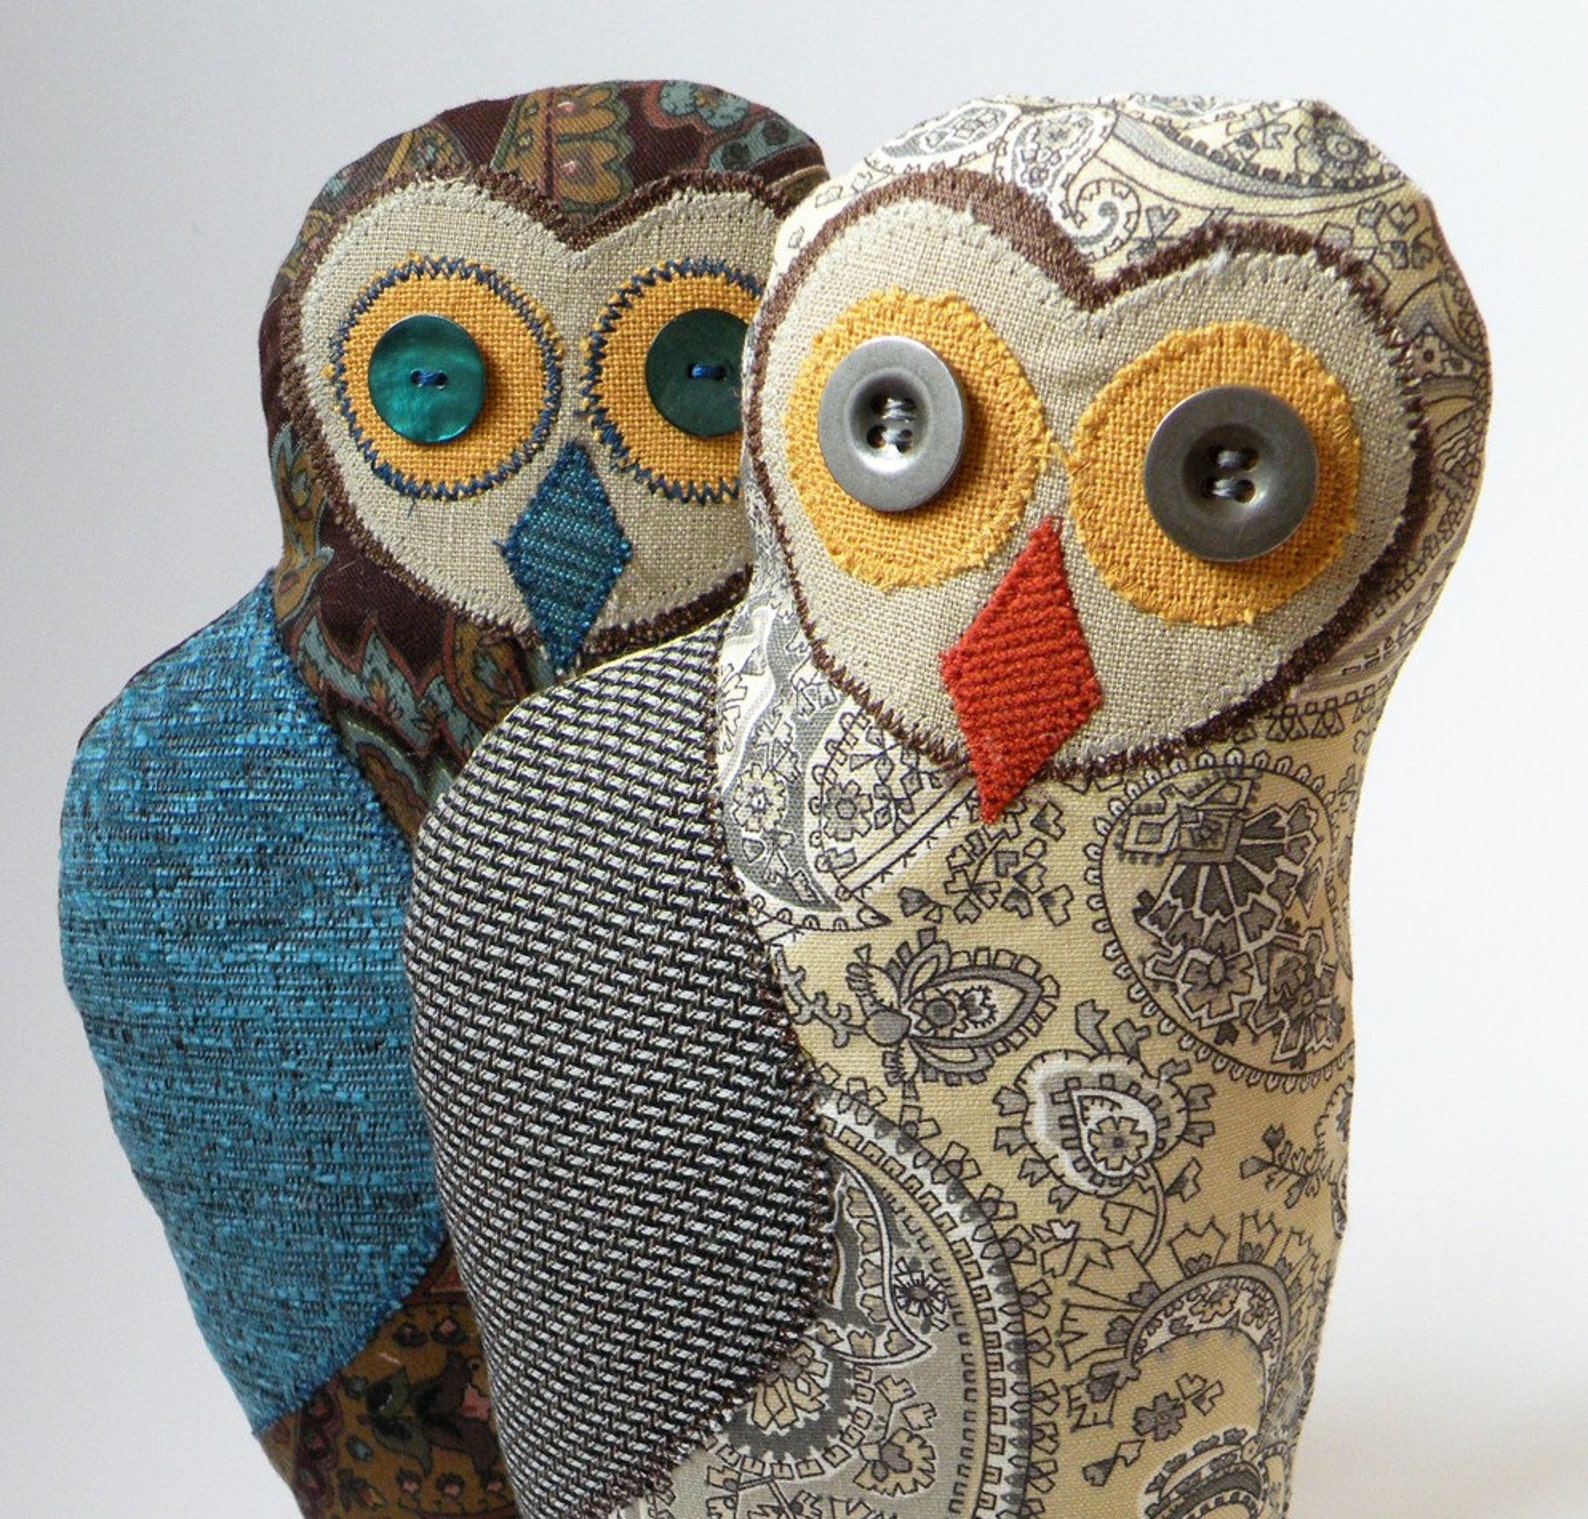 wise-owl-sewing-pattern-tutorial-pdf-digital-download-etsy